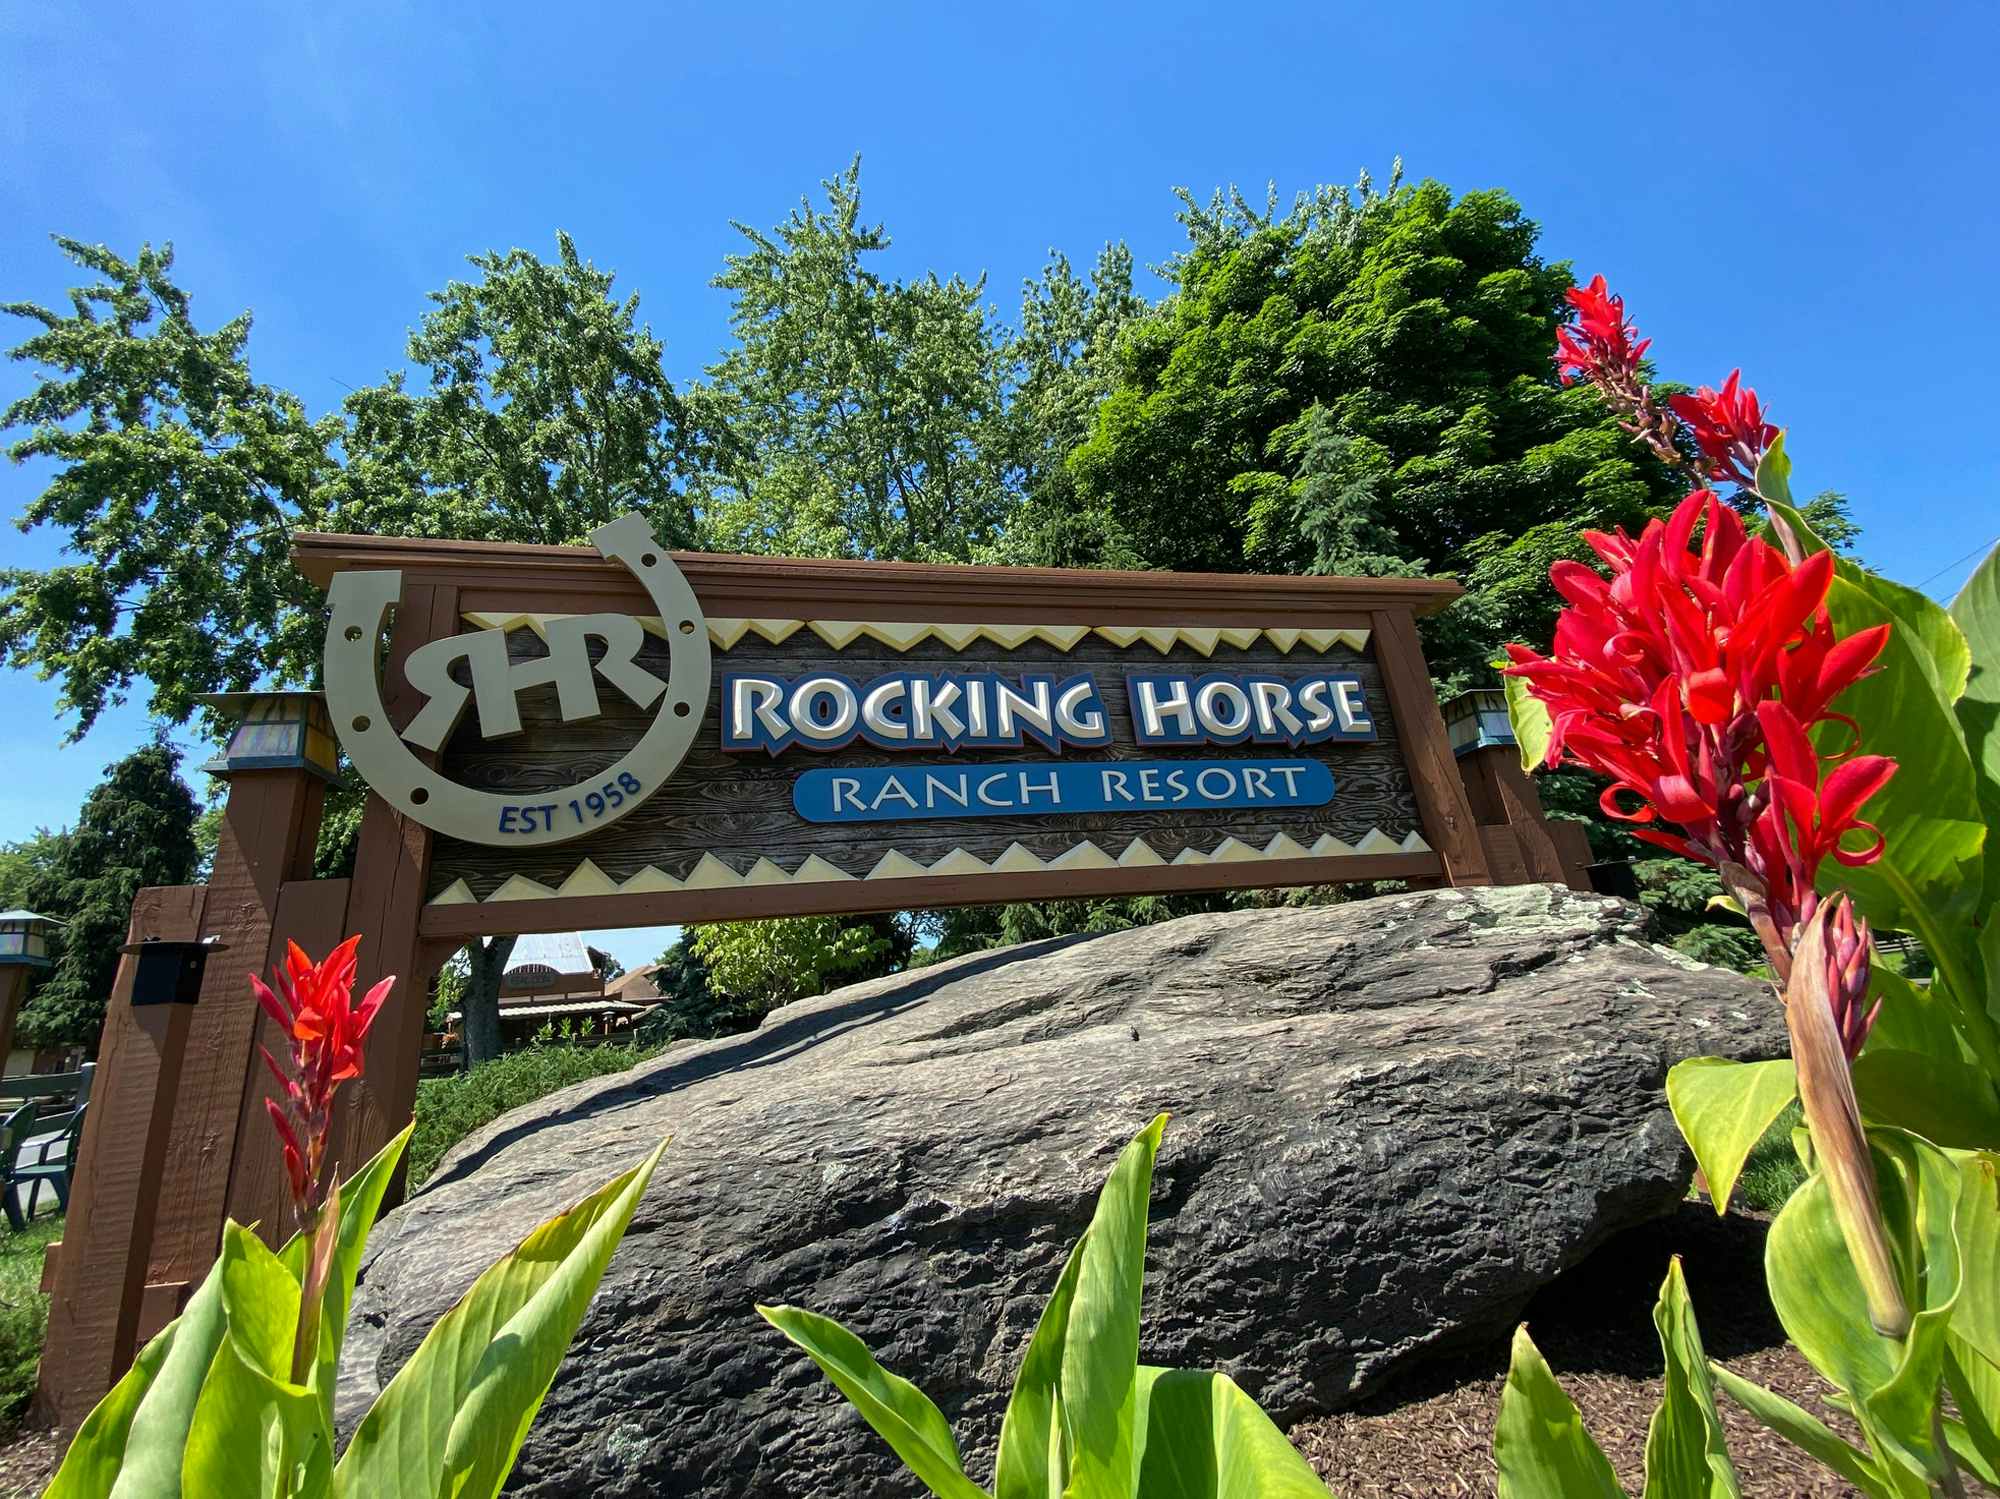 Rocking Horse Ranch Resort sign